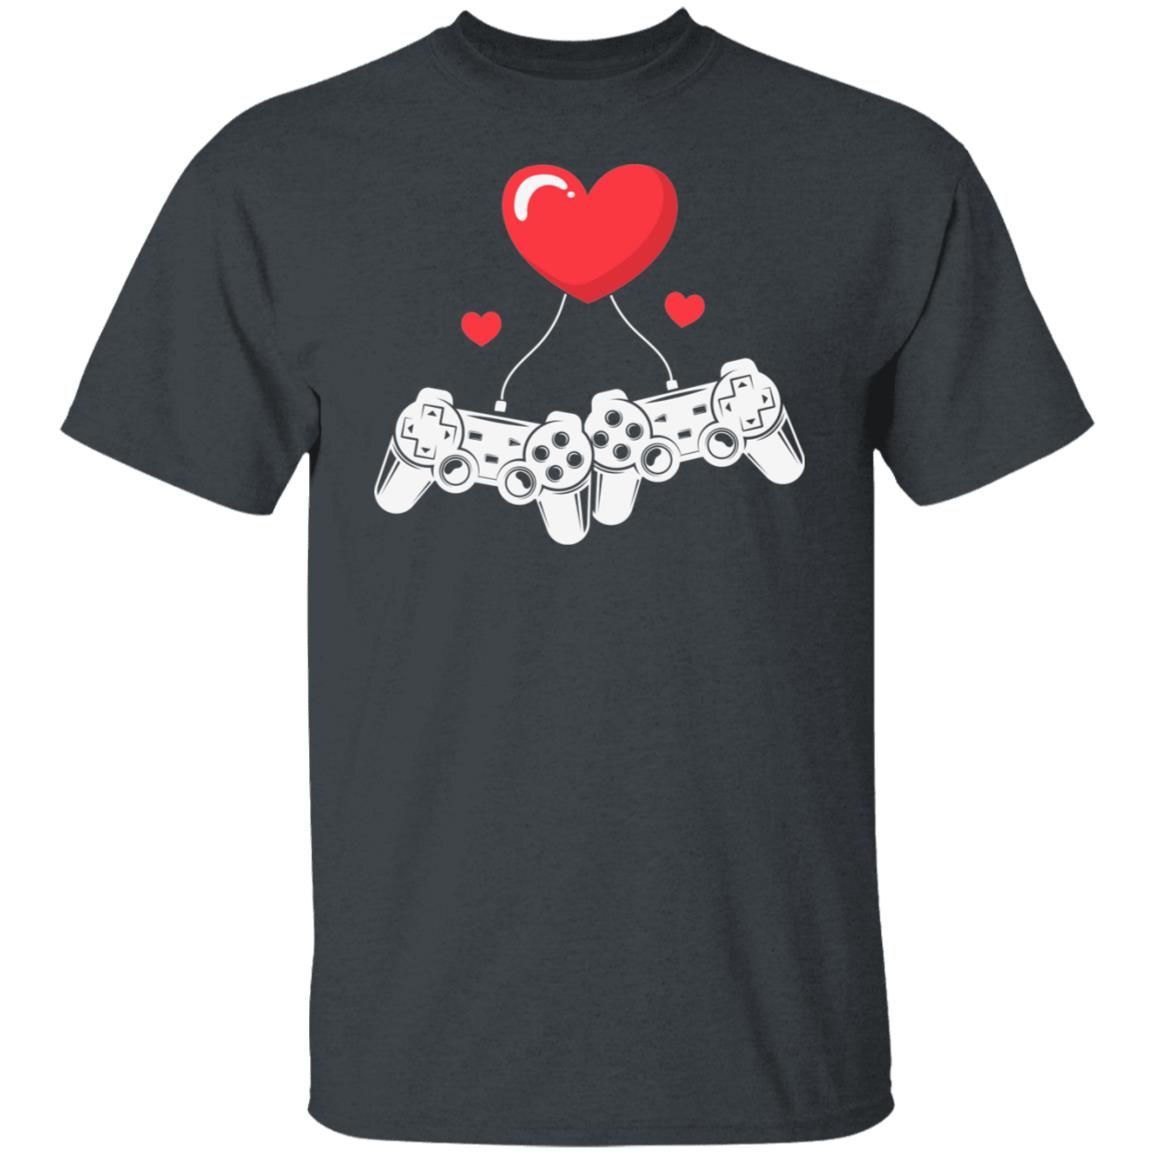 Video Gamer Heart Controller Valentine's Day Shirt